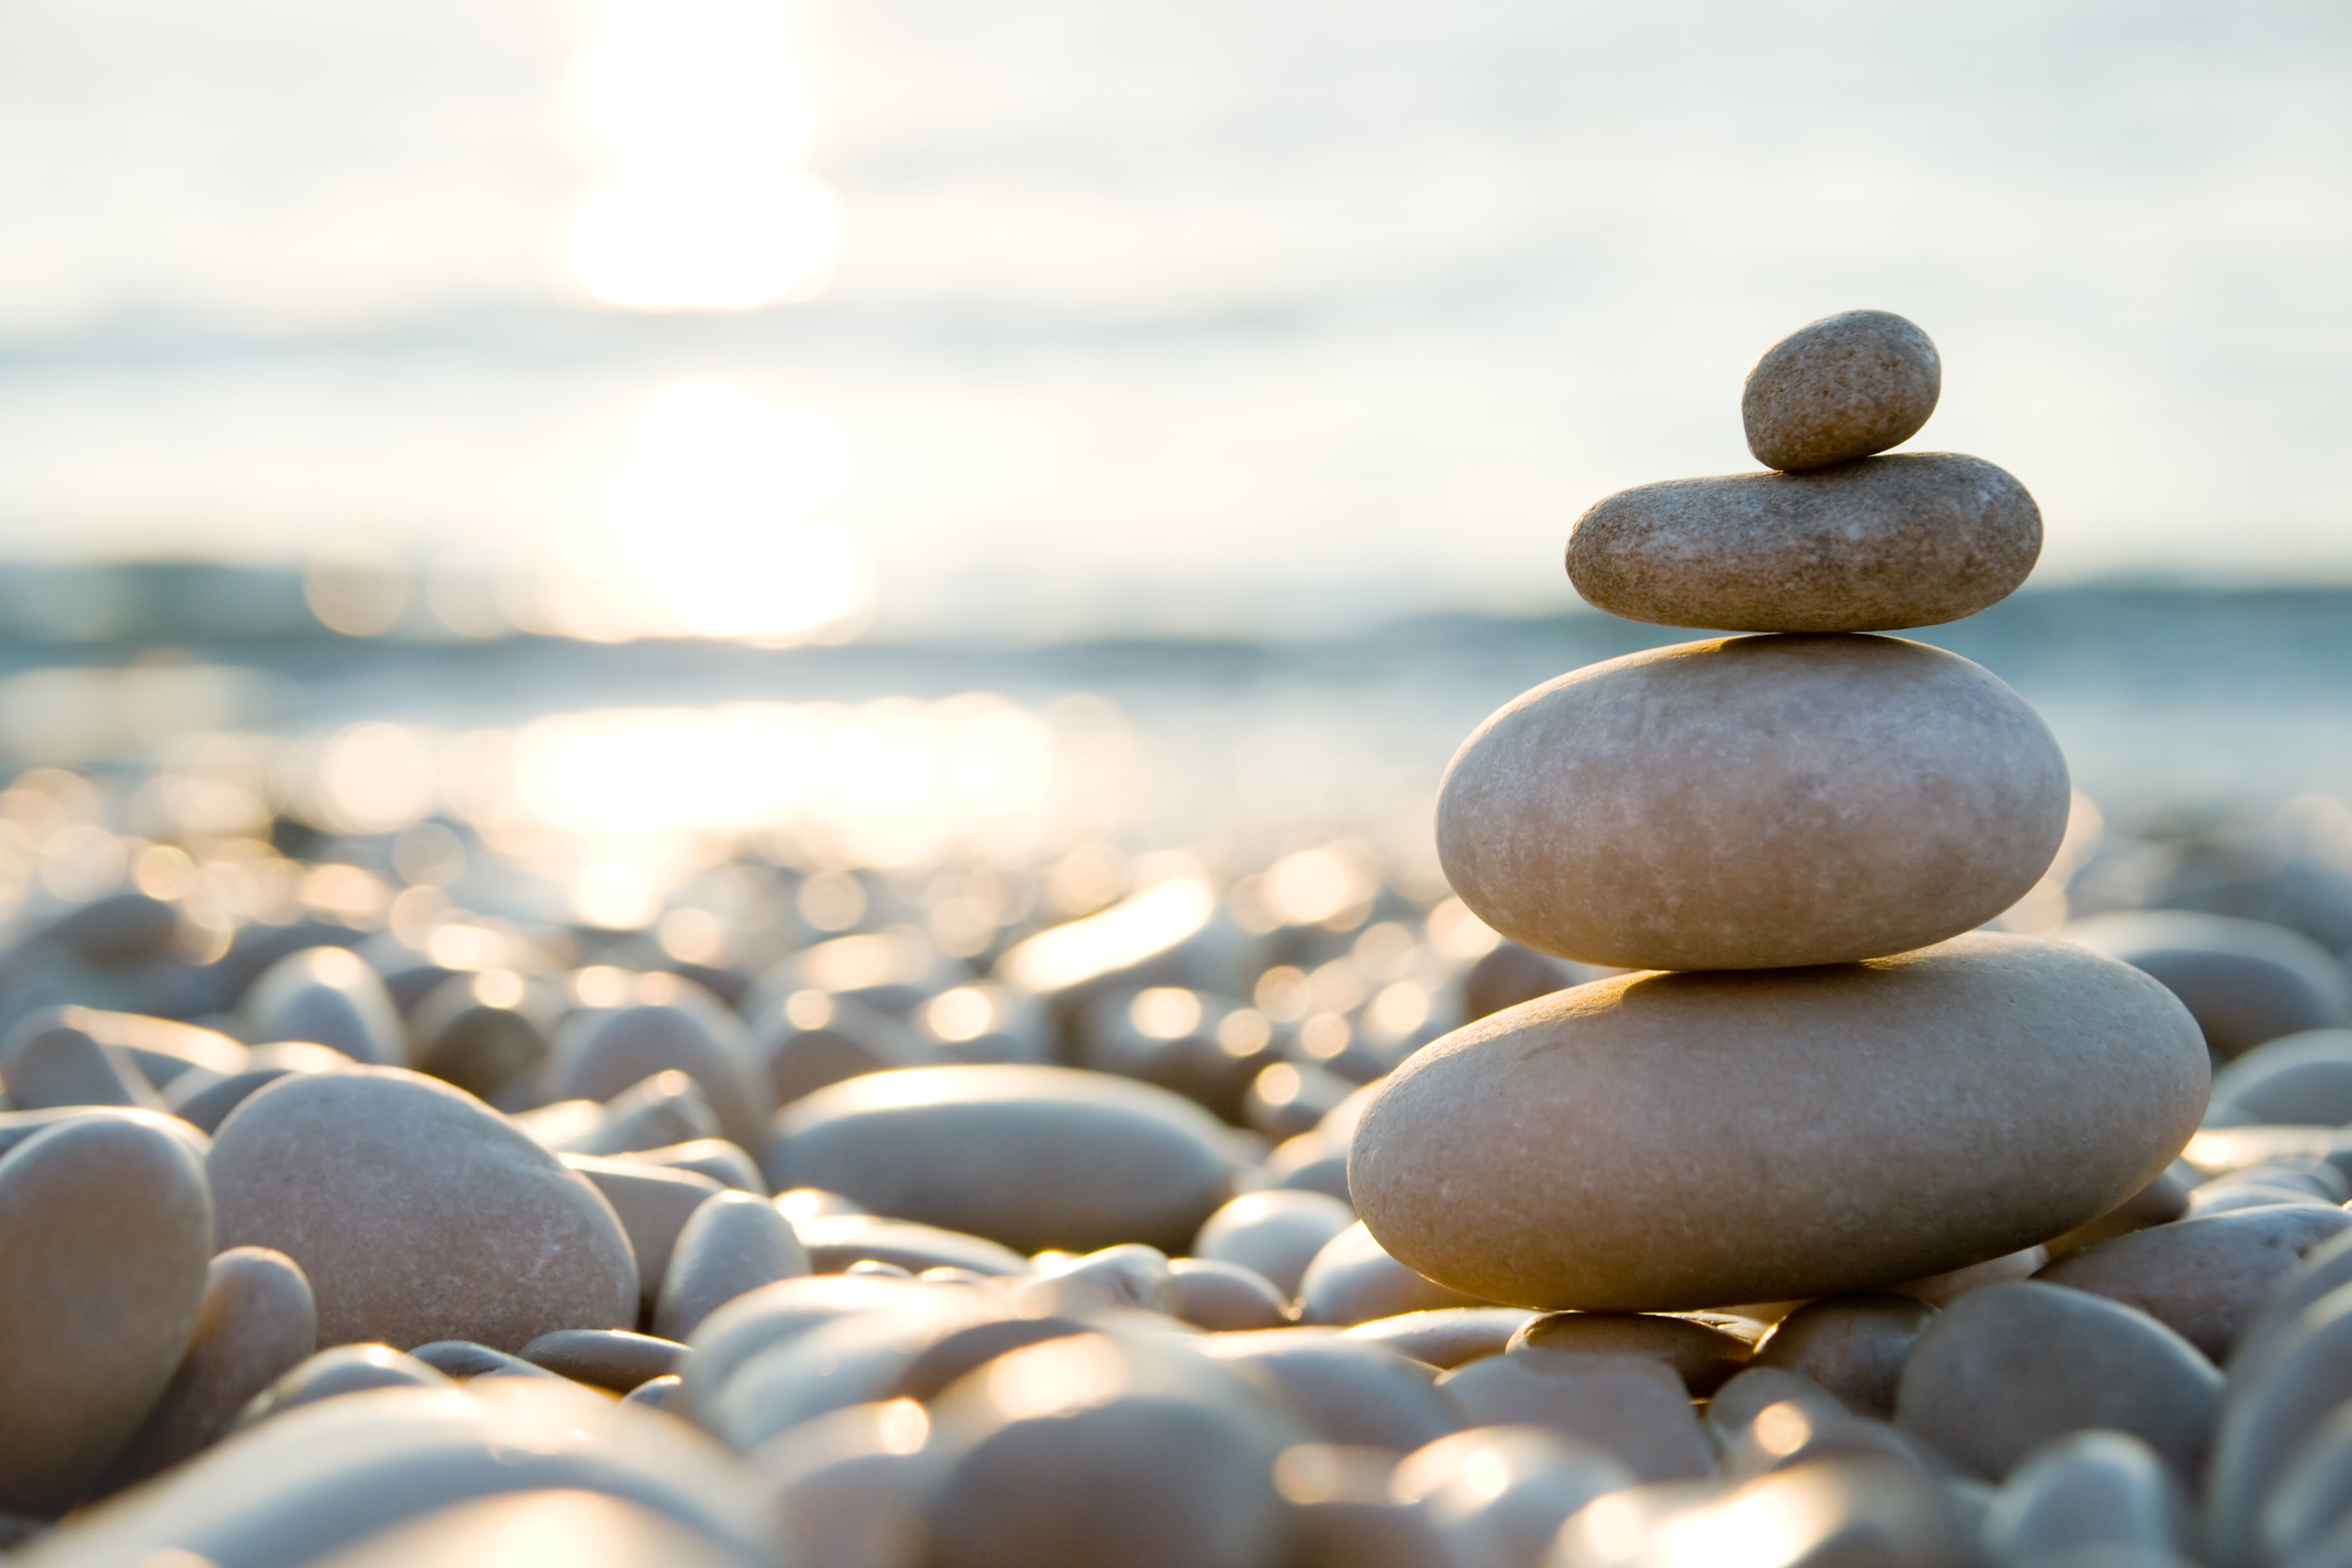 balanced-stones-on-a-pebble-beach-during-sunsetjpg